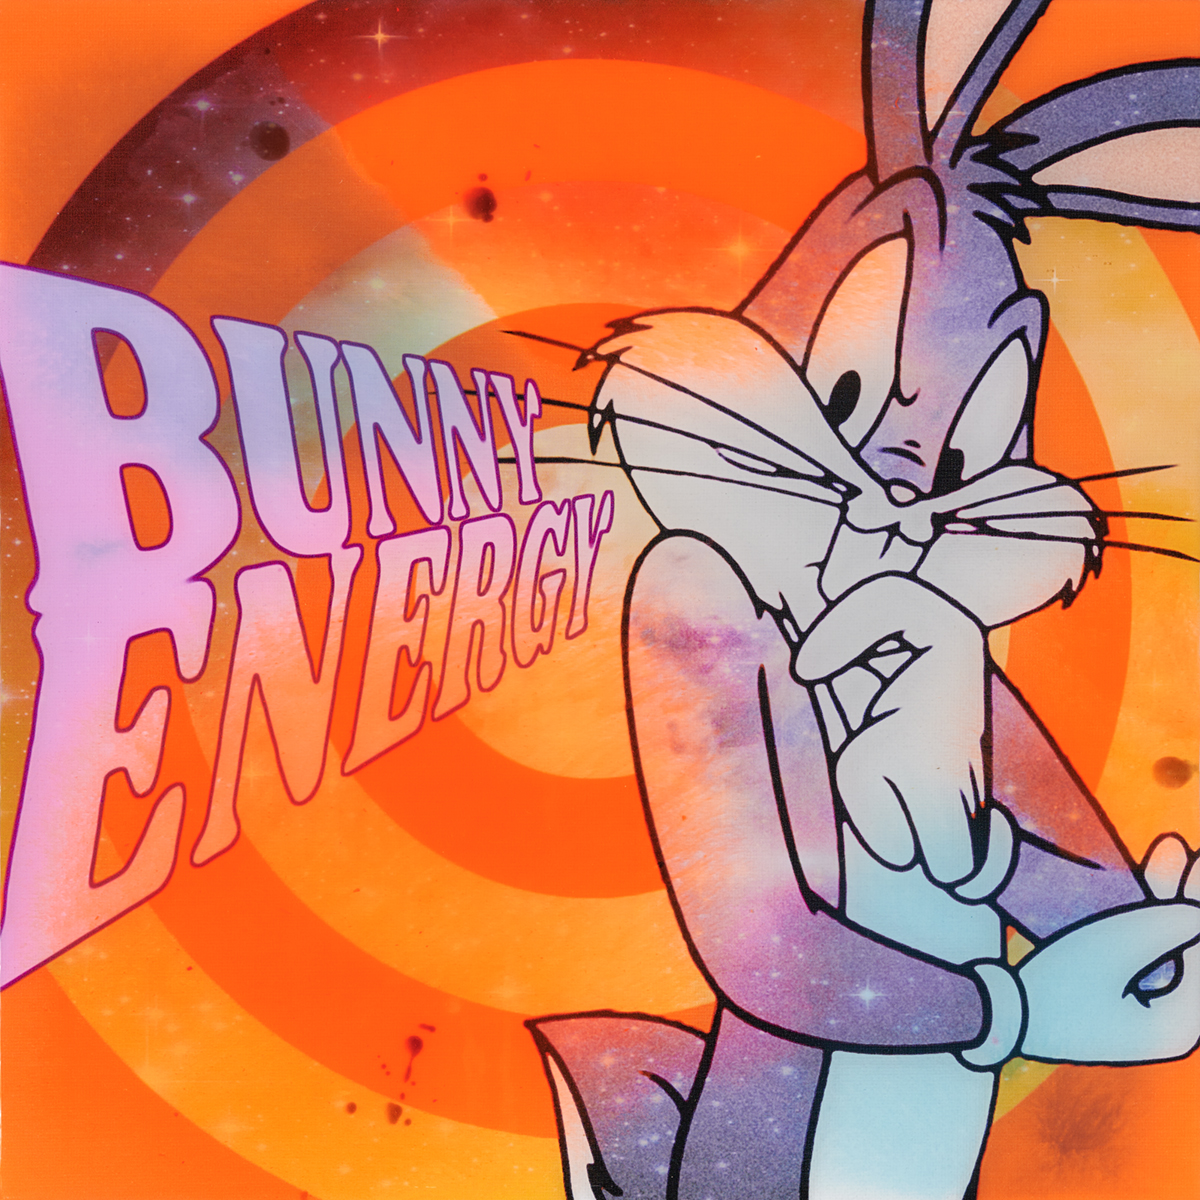 Joerg Doering – Bunny energy